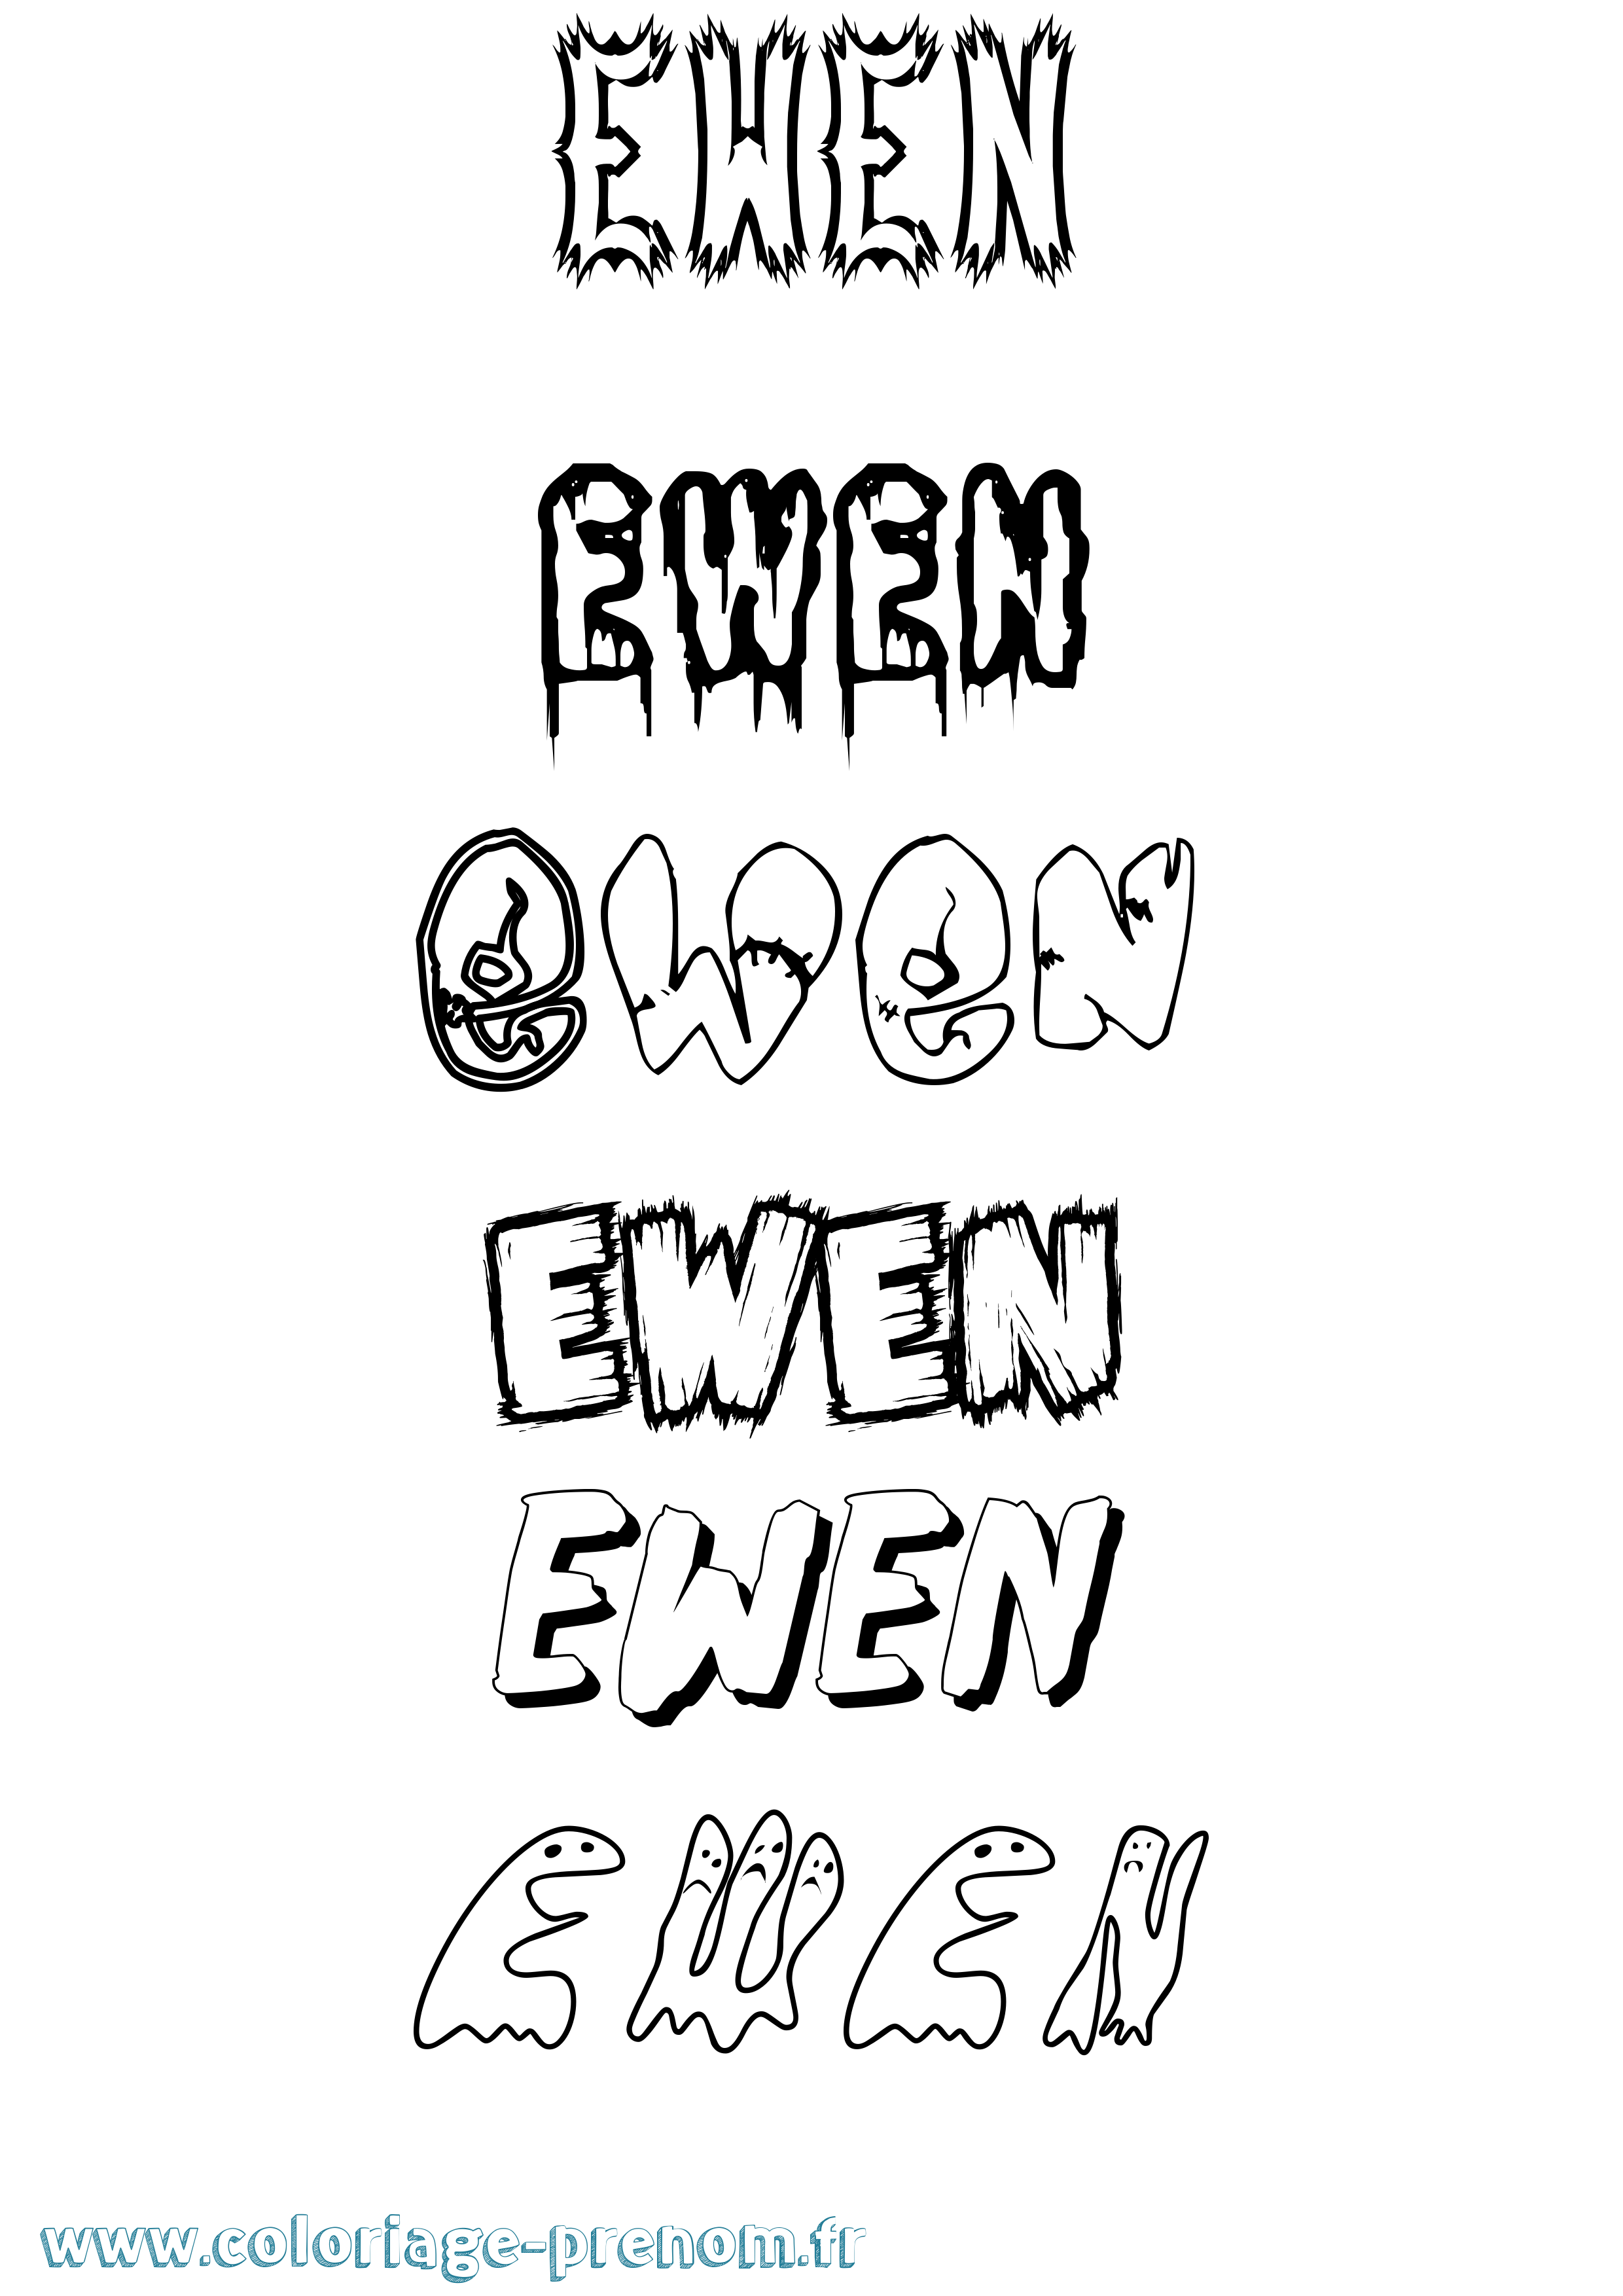 Coloriage prénom Ewen